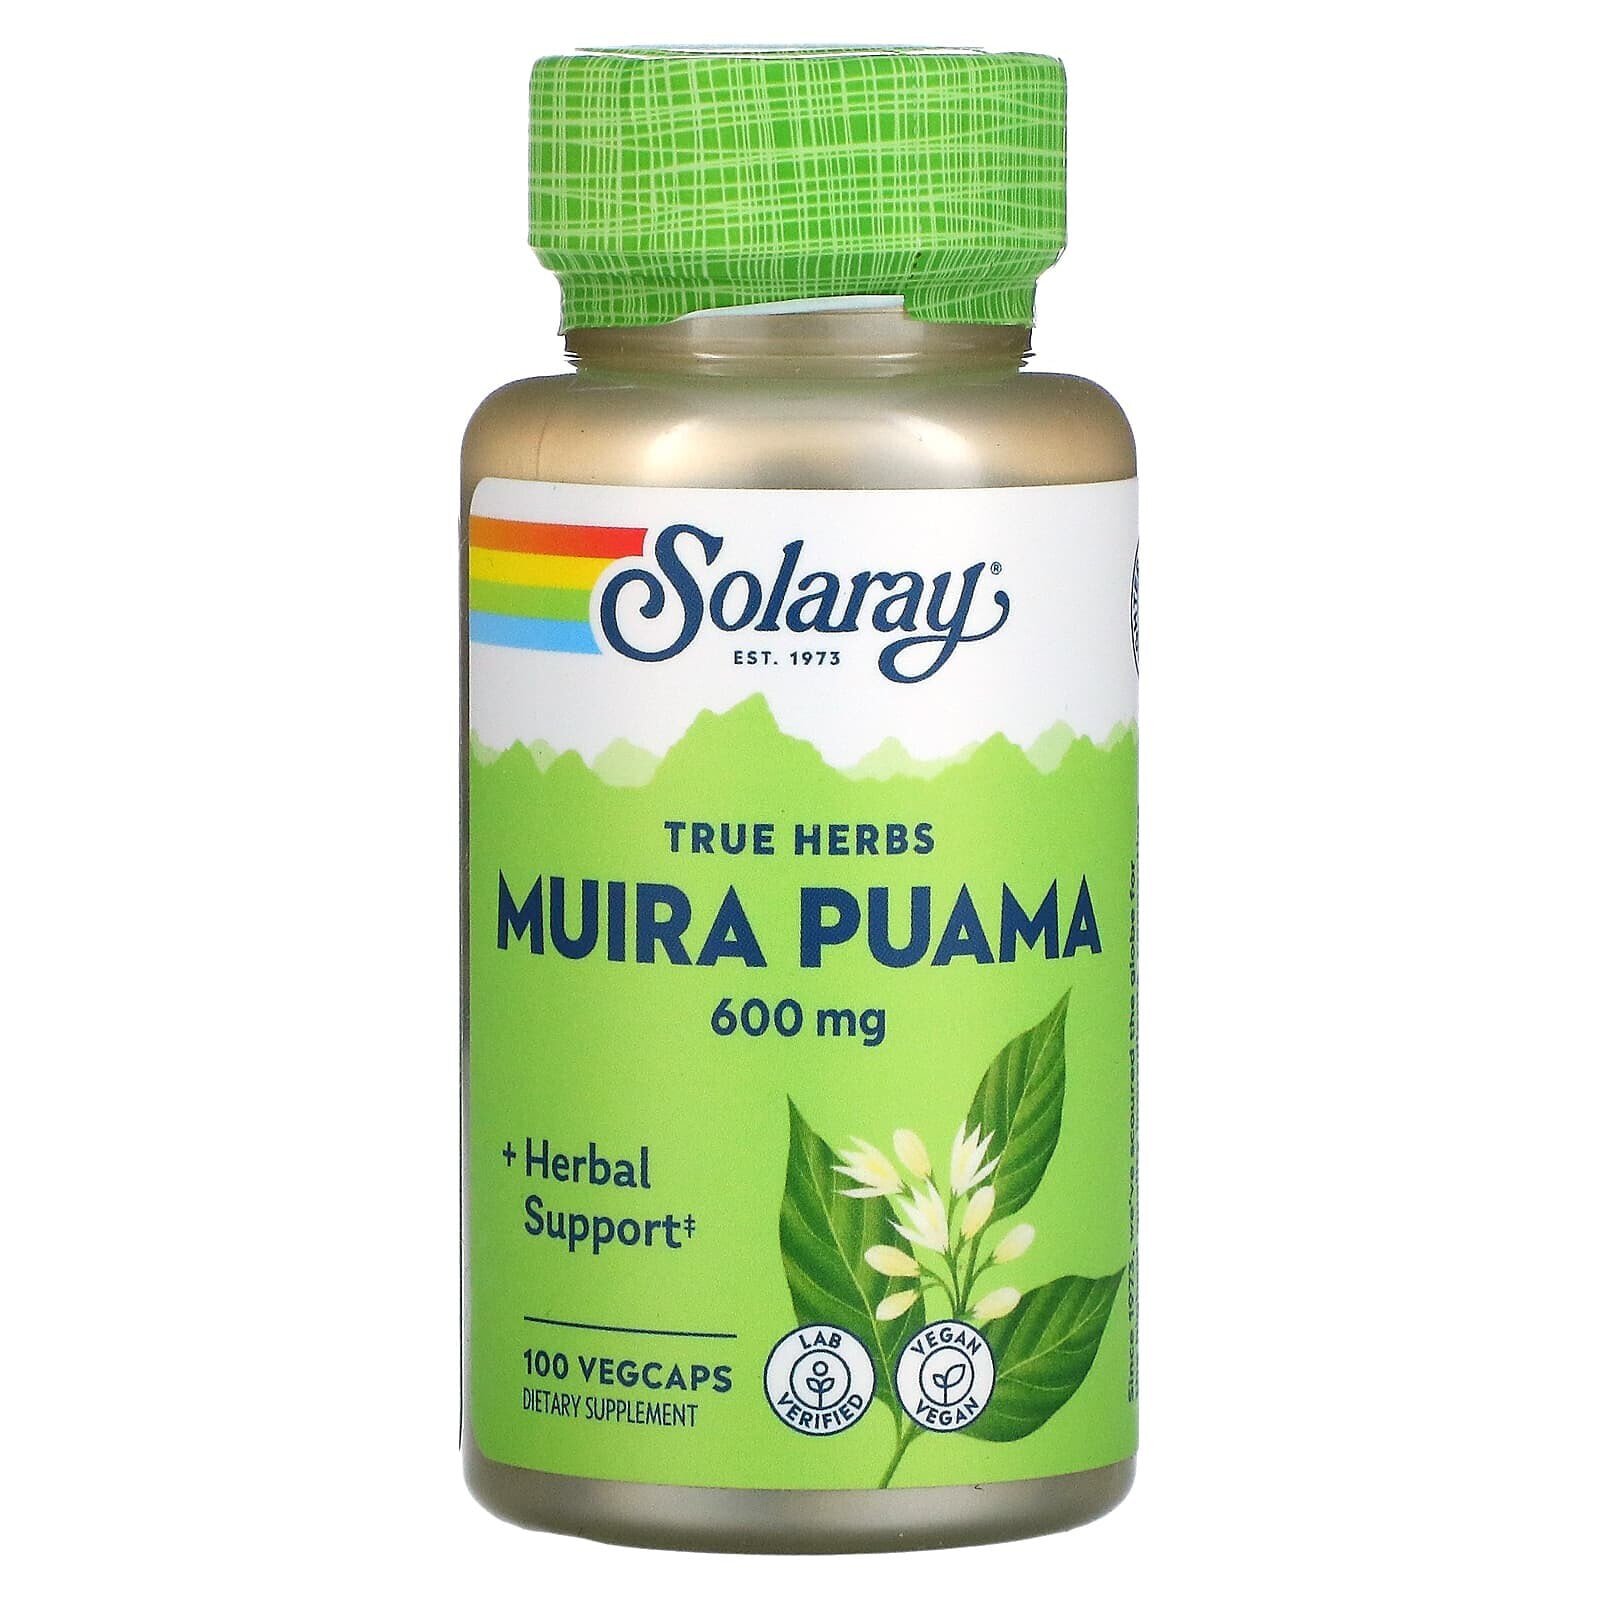 True Herbs, Muira Puama, 600 mg, 100 VegCaps (300 mg per Capsule)